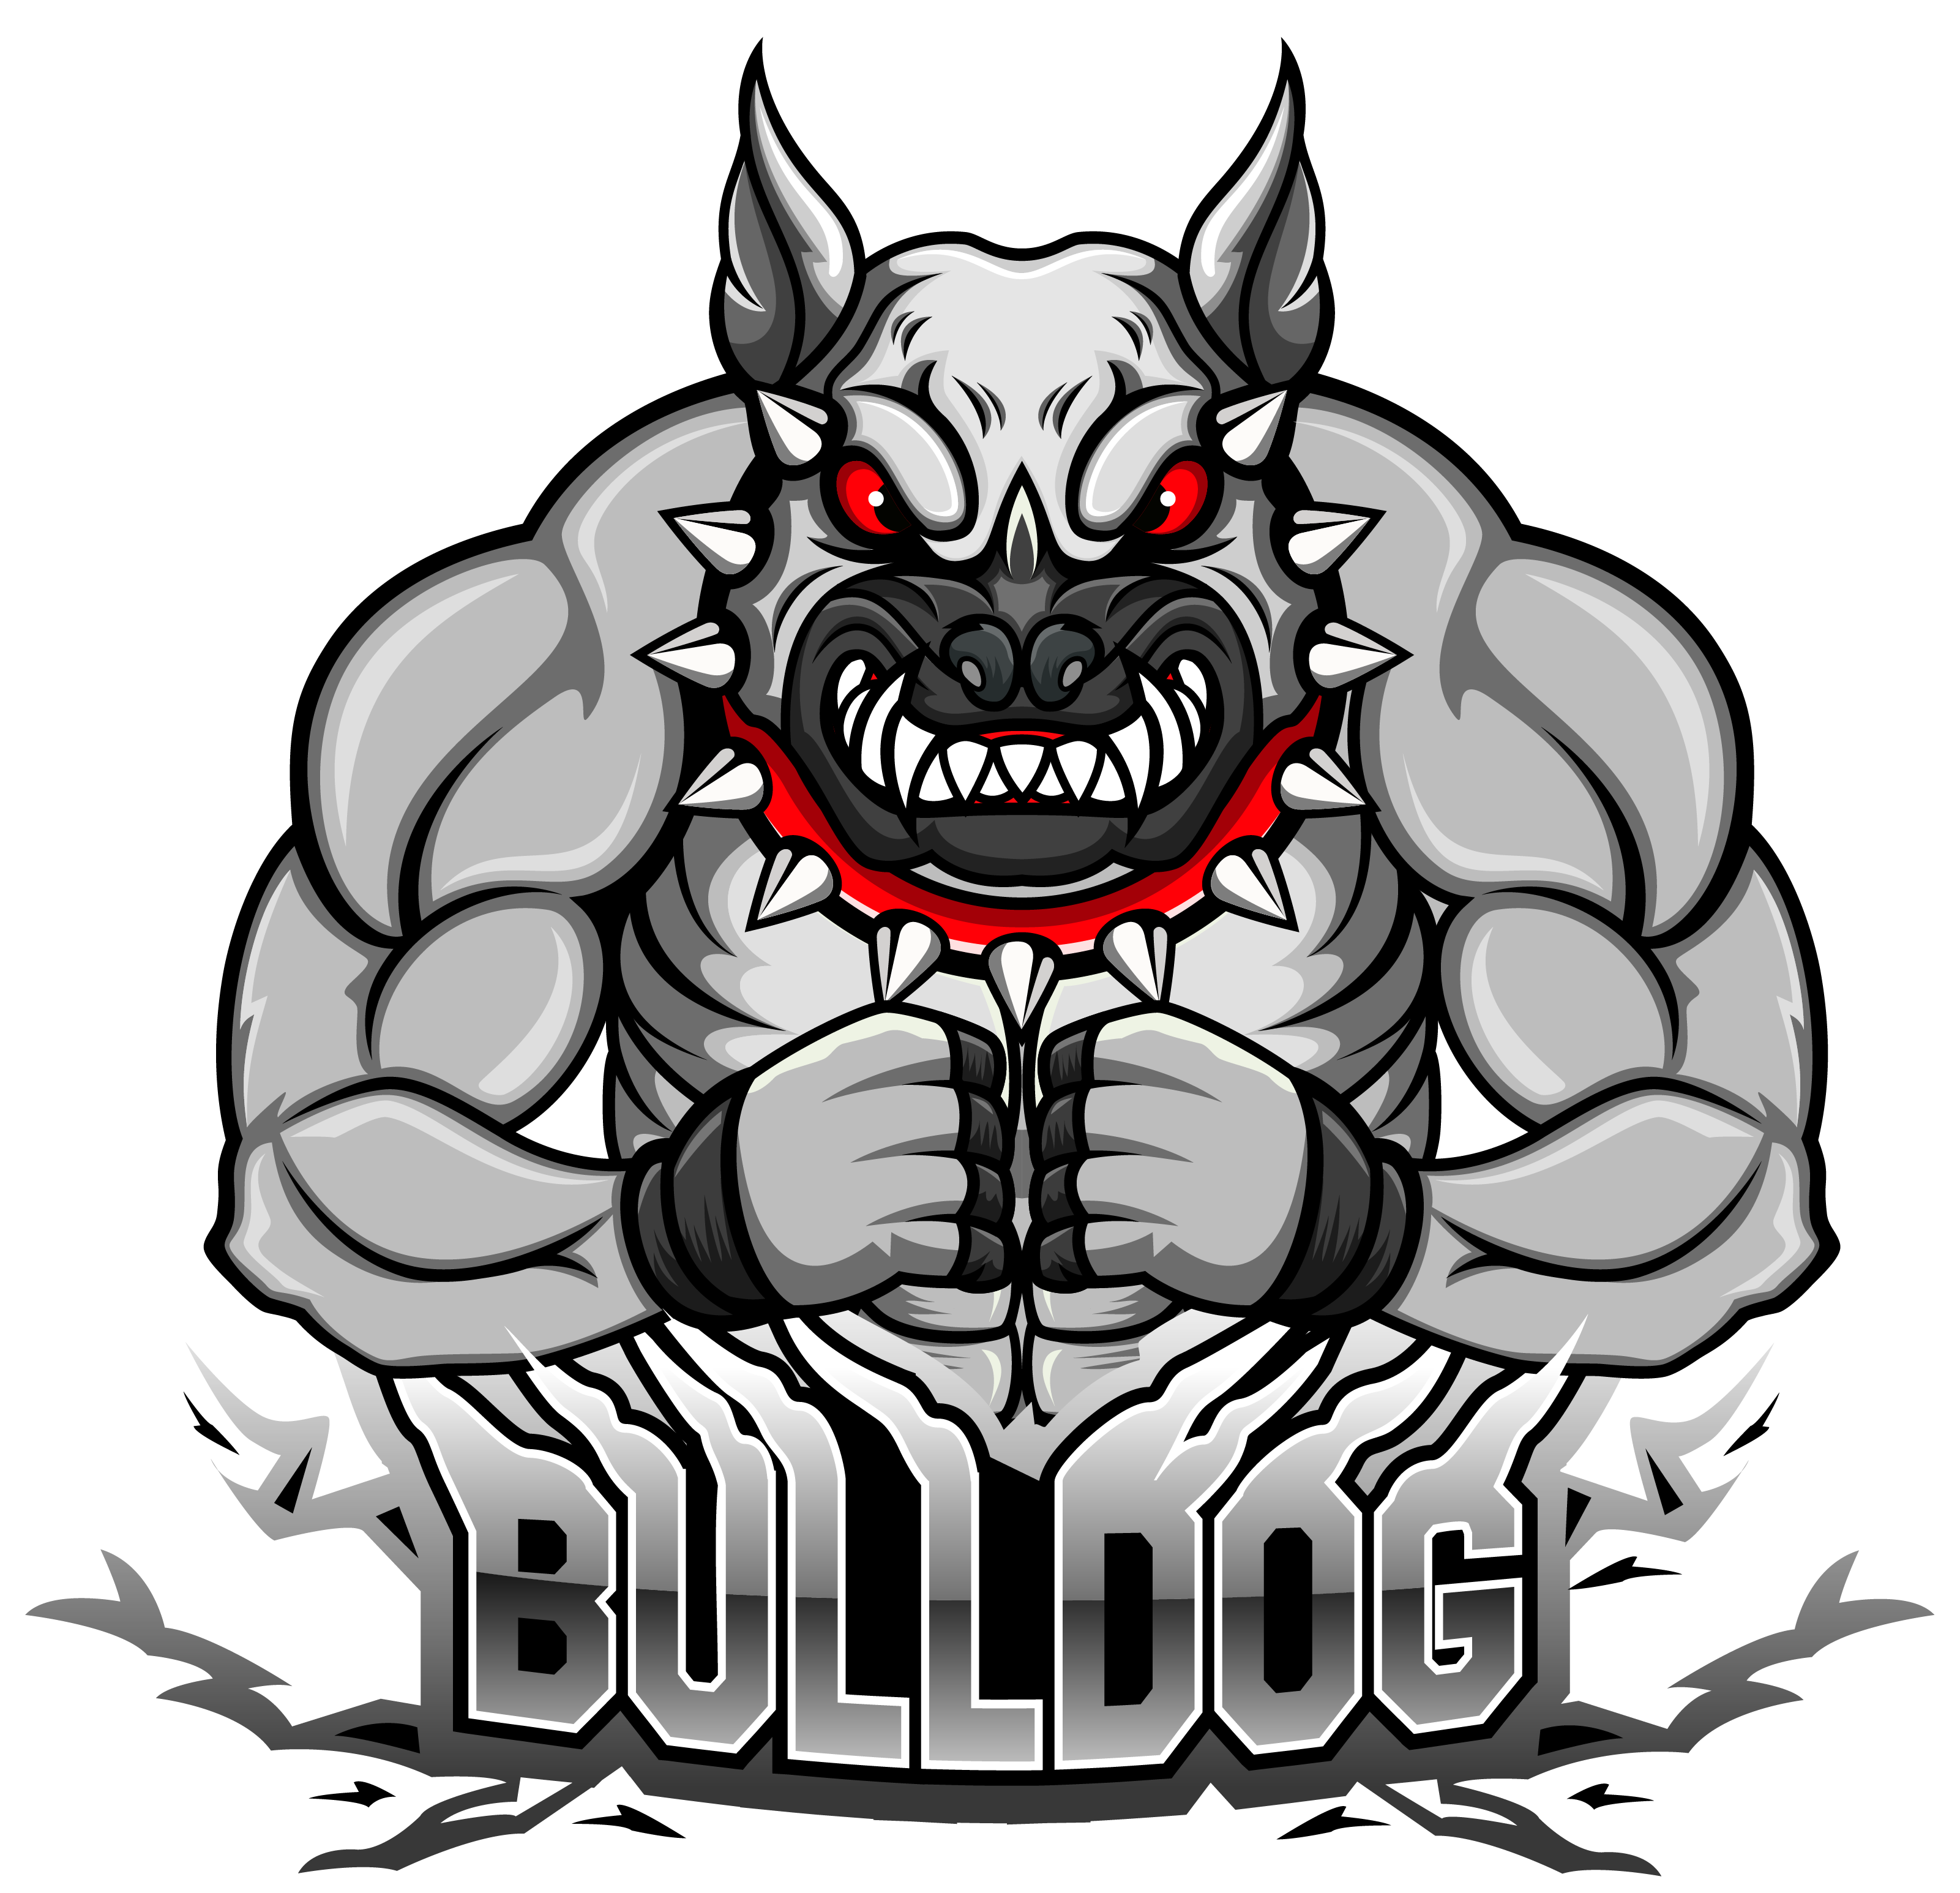 Bulldog esport mascot logo design By Visink | TheHungryJPEG.com